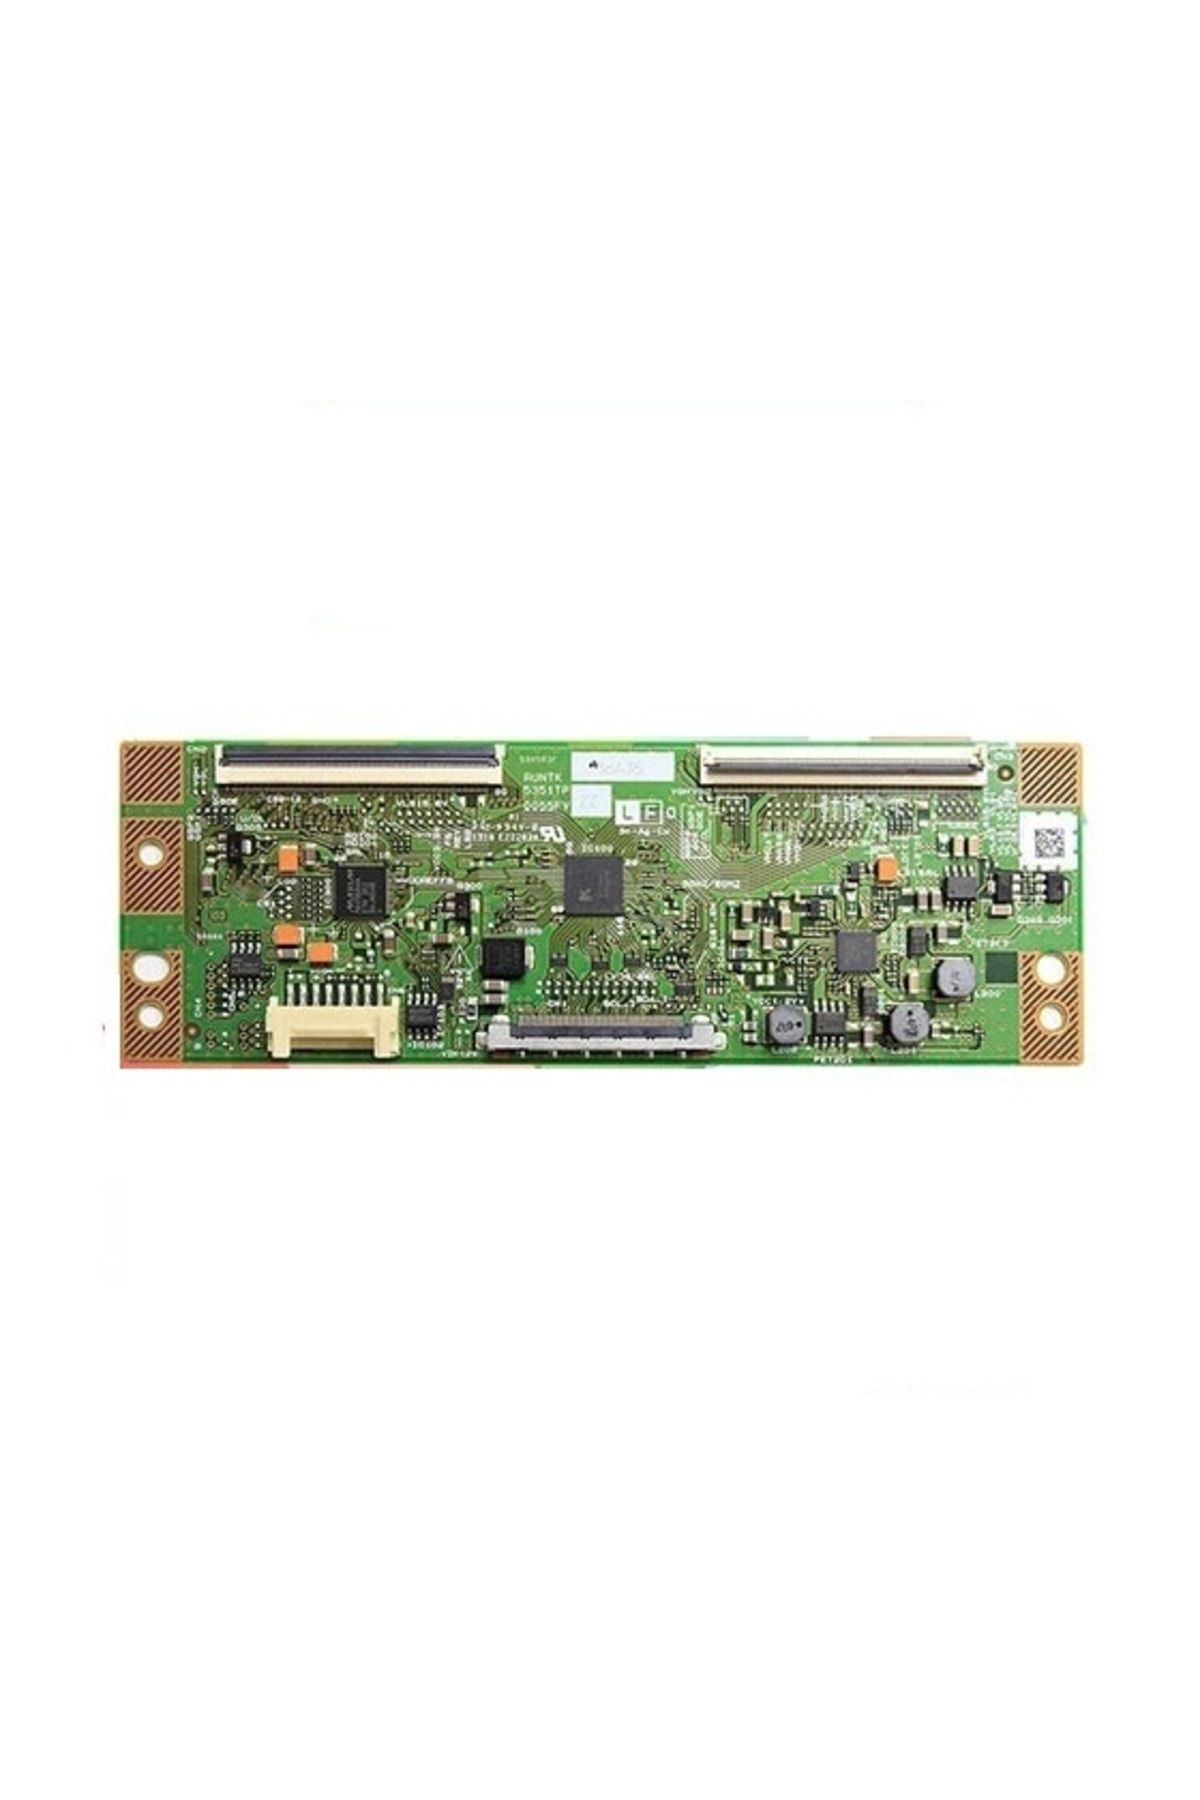 Samsung Lcd Led T-con Board Runtk 5351tp - Ue32f5070 - Ue32f5570 (cy-hf320bgsv1h)